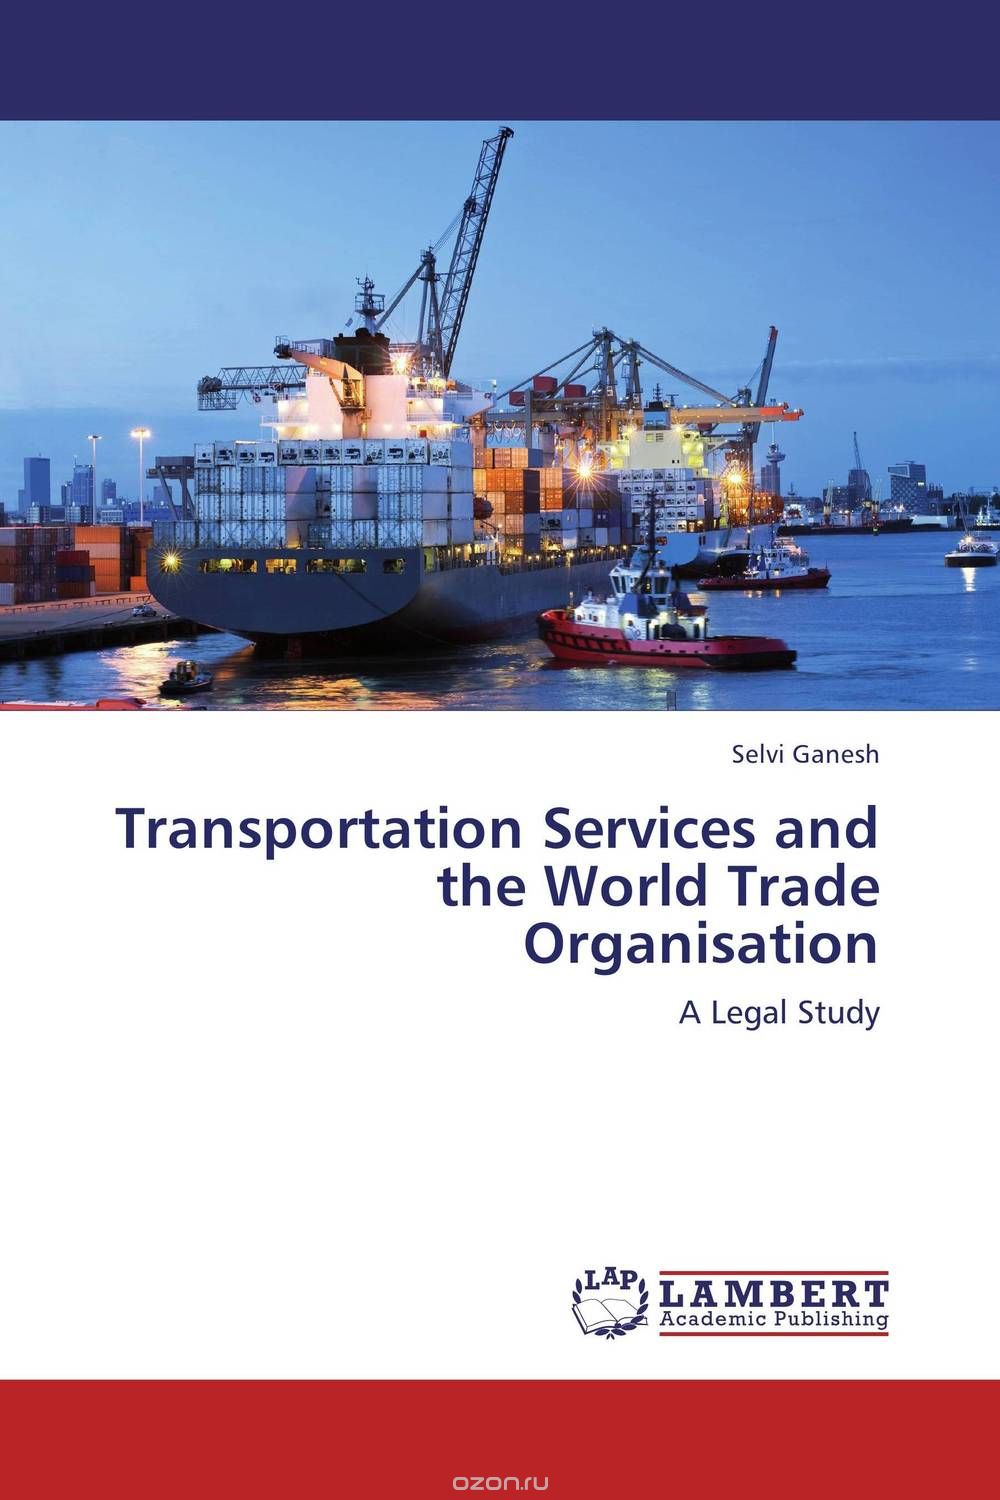 Скачать книгу "Transportation Services and the World Trade Organisation"